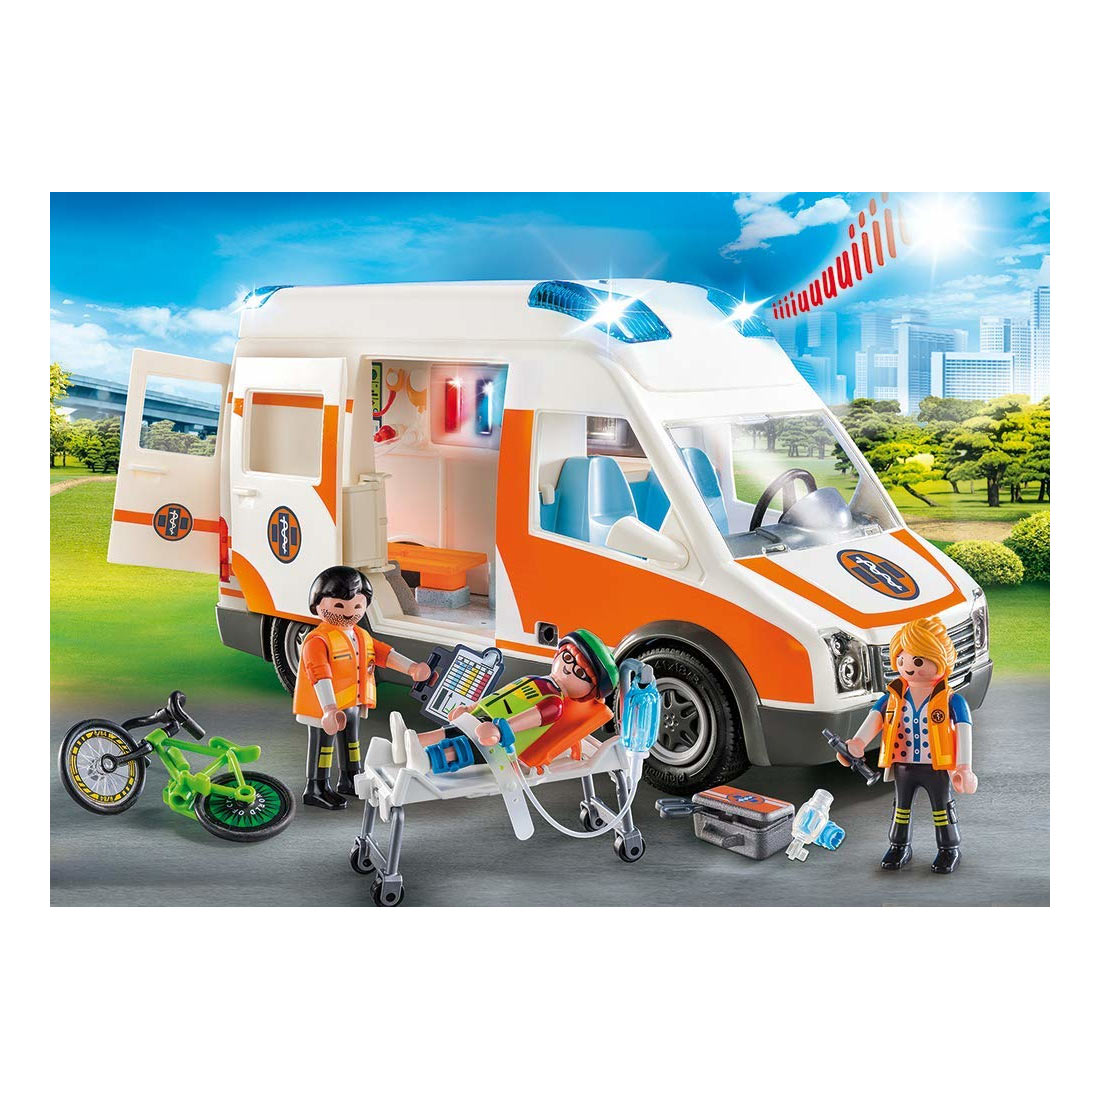 Playmobil City Life  Ambulance en Ambulanciers - 70049